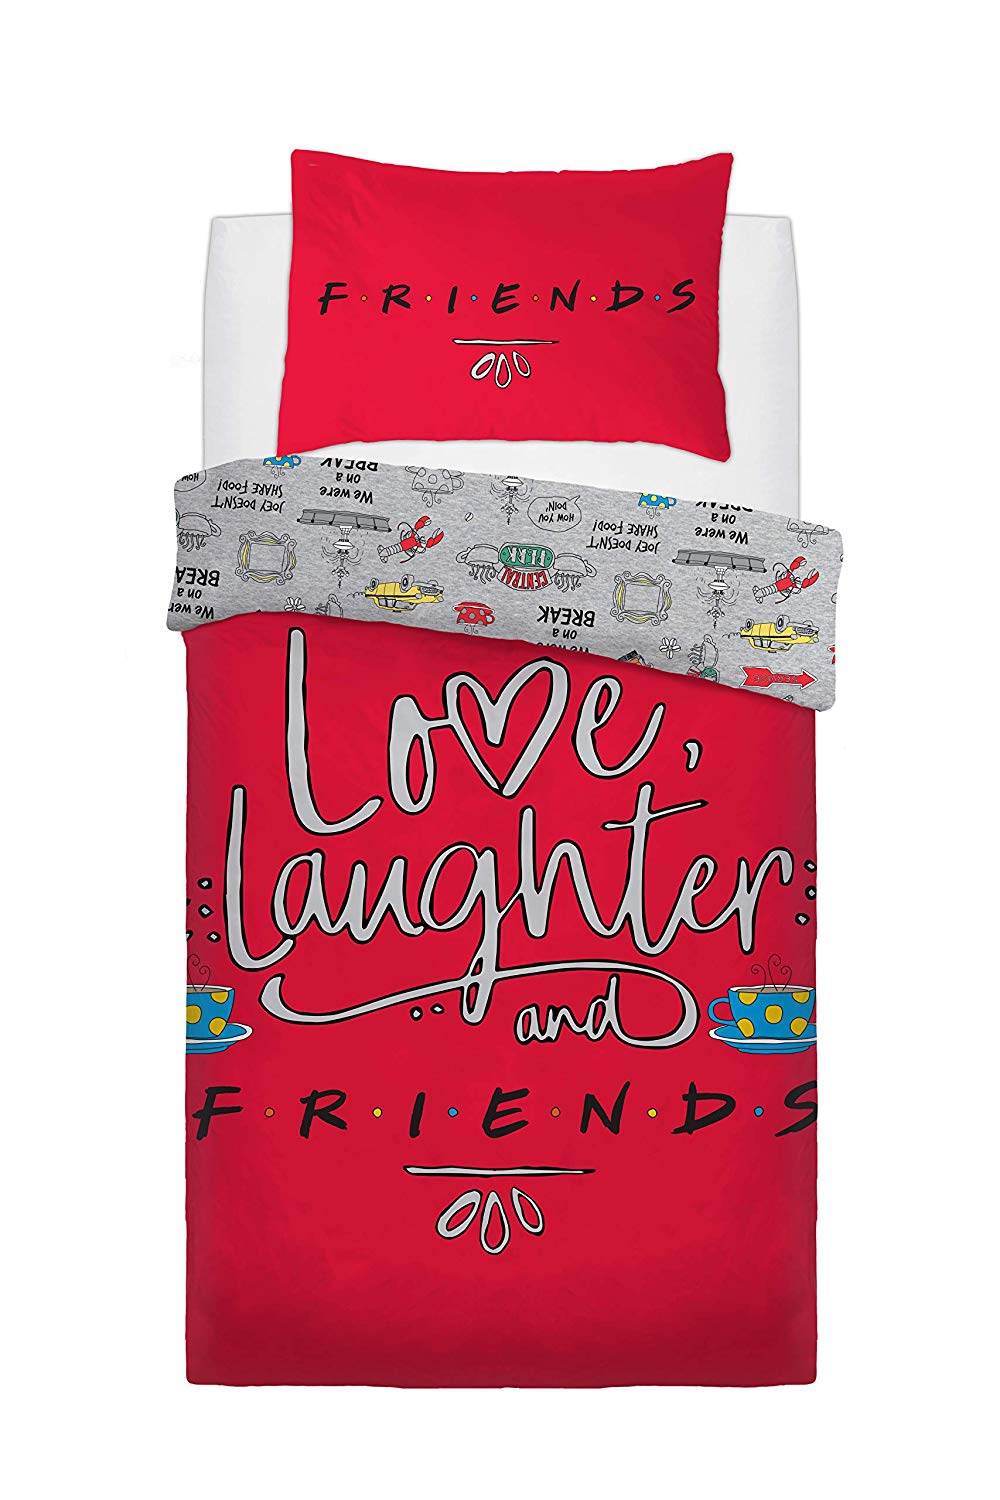 Friend Love Laughter Panel Single Bed Duvet Quilt Cover Set